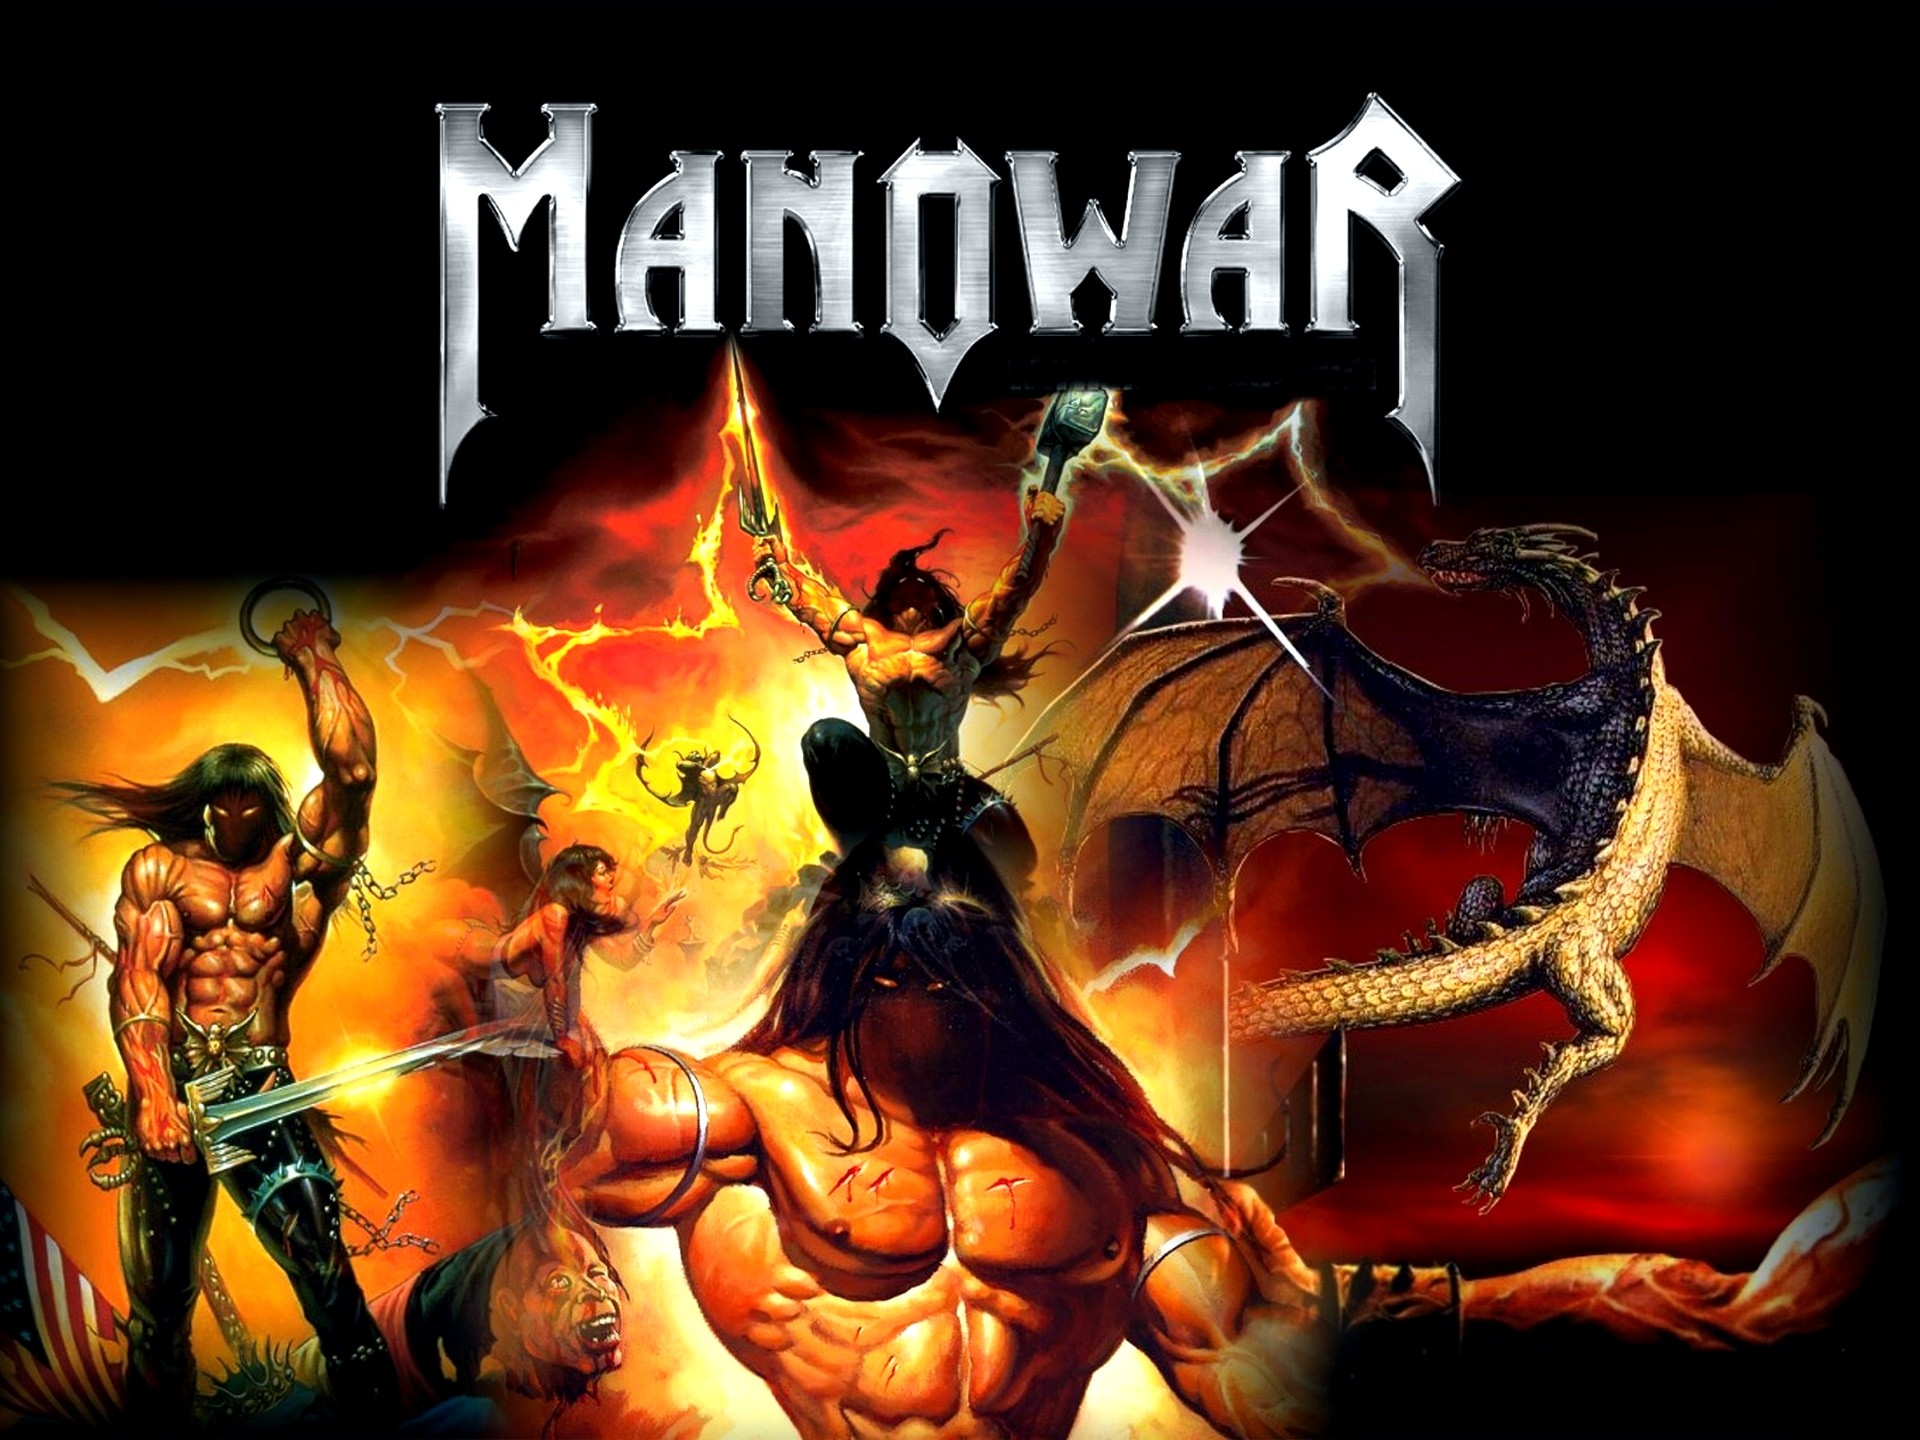 Manowar united. Группа Manowar иллюстрации. Группа Manowar 2021. Постеры группы Manowar. Плакаты группы мановар.